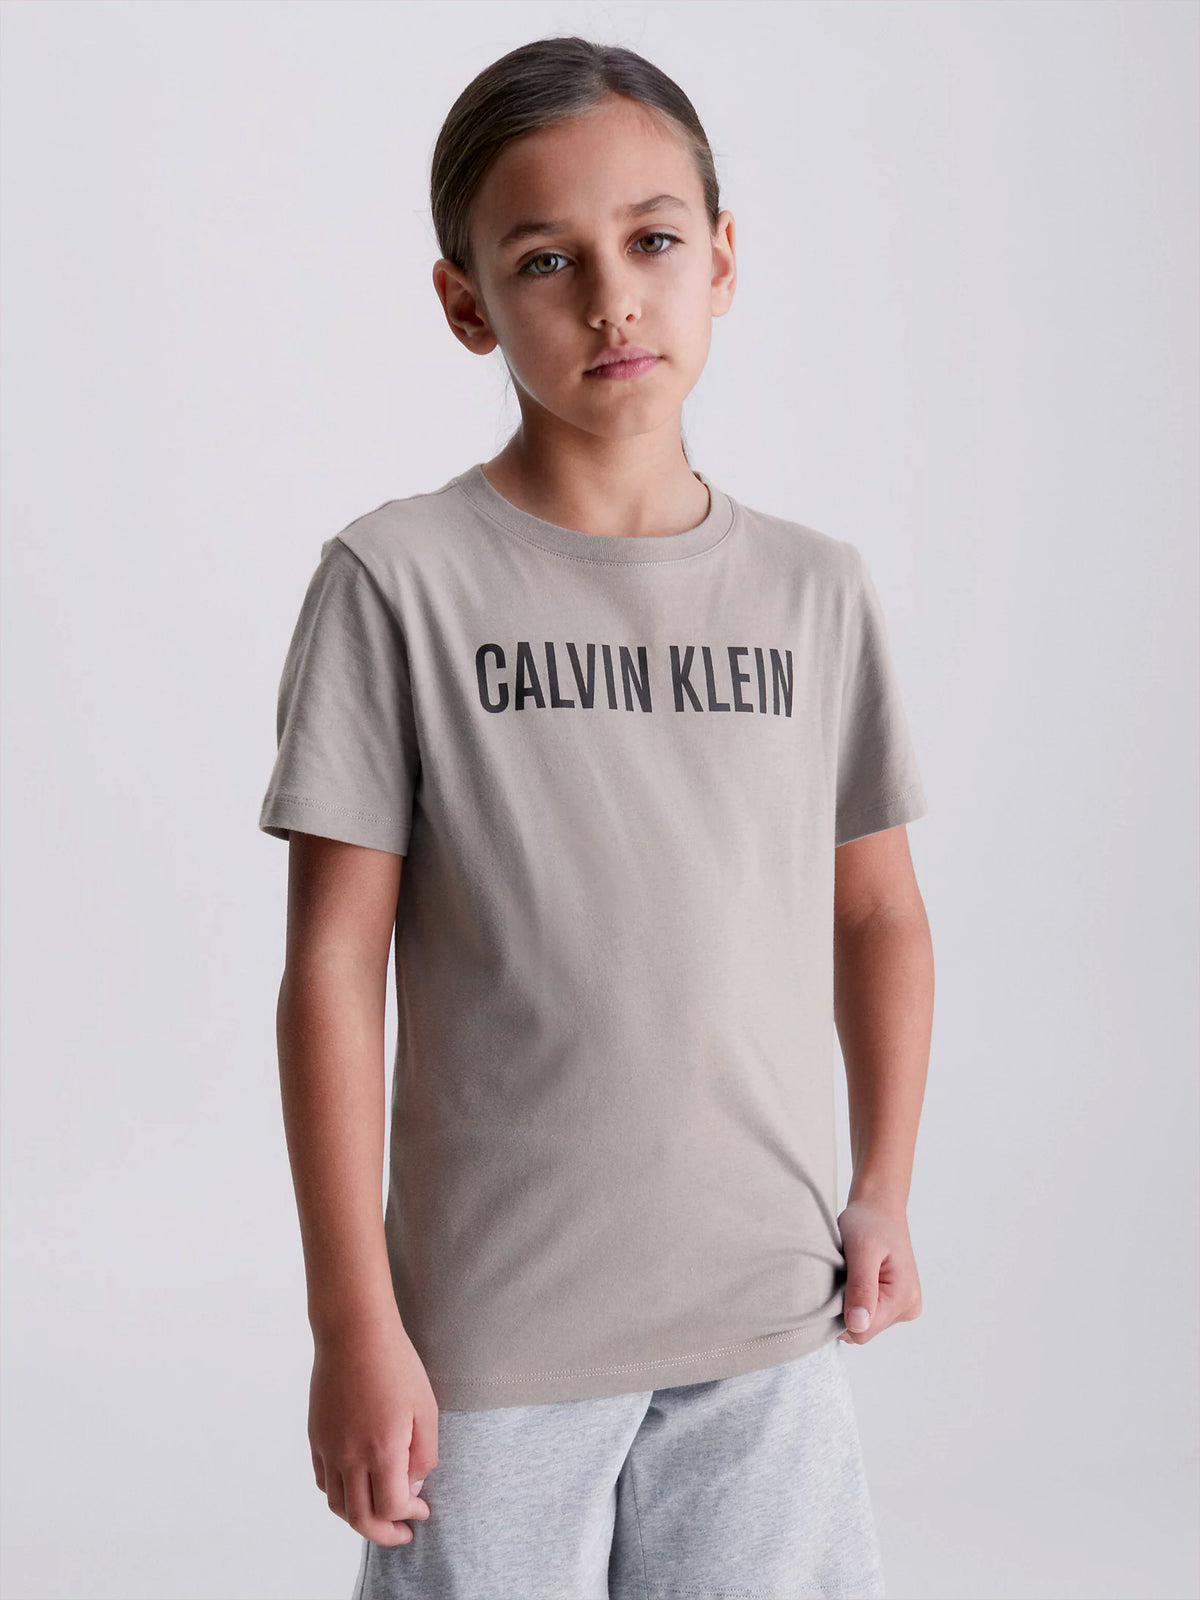 Calvin Klein Boys Intense Power T-Shirt - 2 Pack, 04, B70B700431, Pebblestone/ W/ Bluecrush